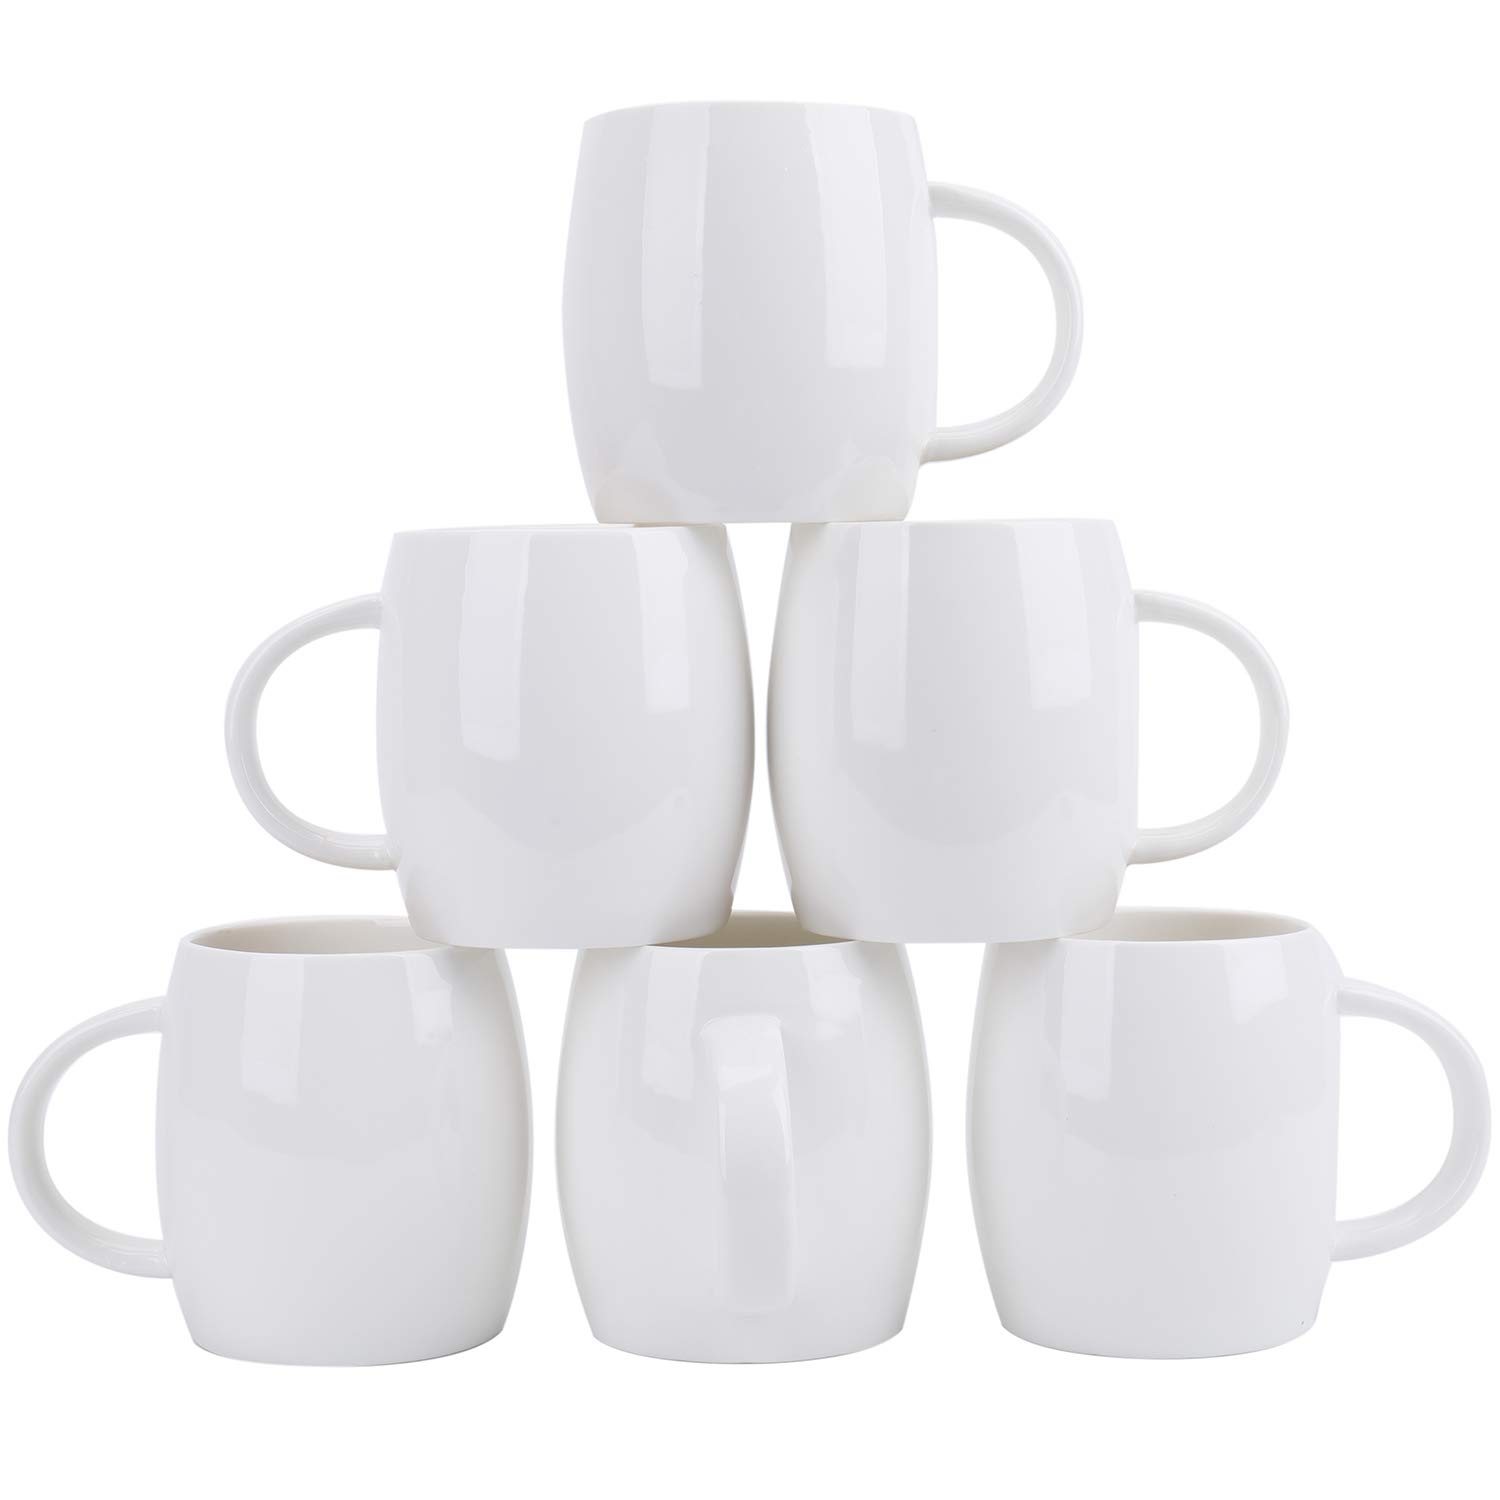 Foraineam Set of 6 Porcelain Mugs 15 Ounces White Coffee Mugs Set Ceramic Drinking Cups for Coffee, Tea, Juice, Cocoa